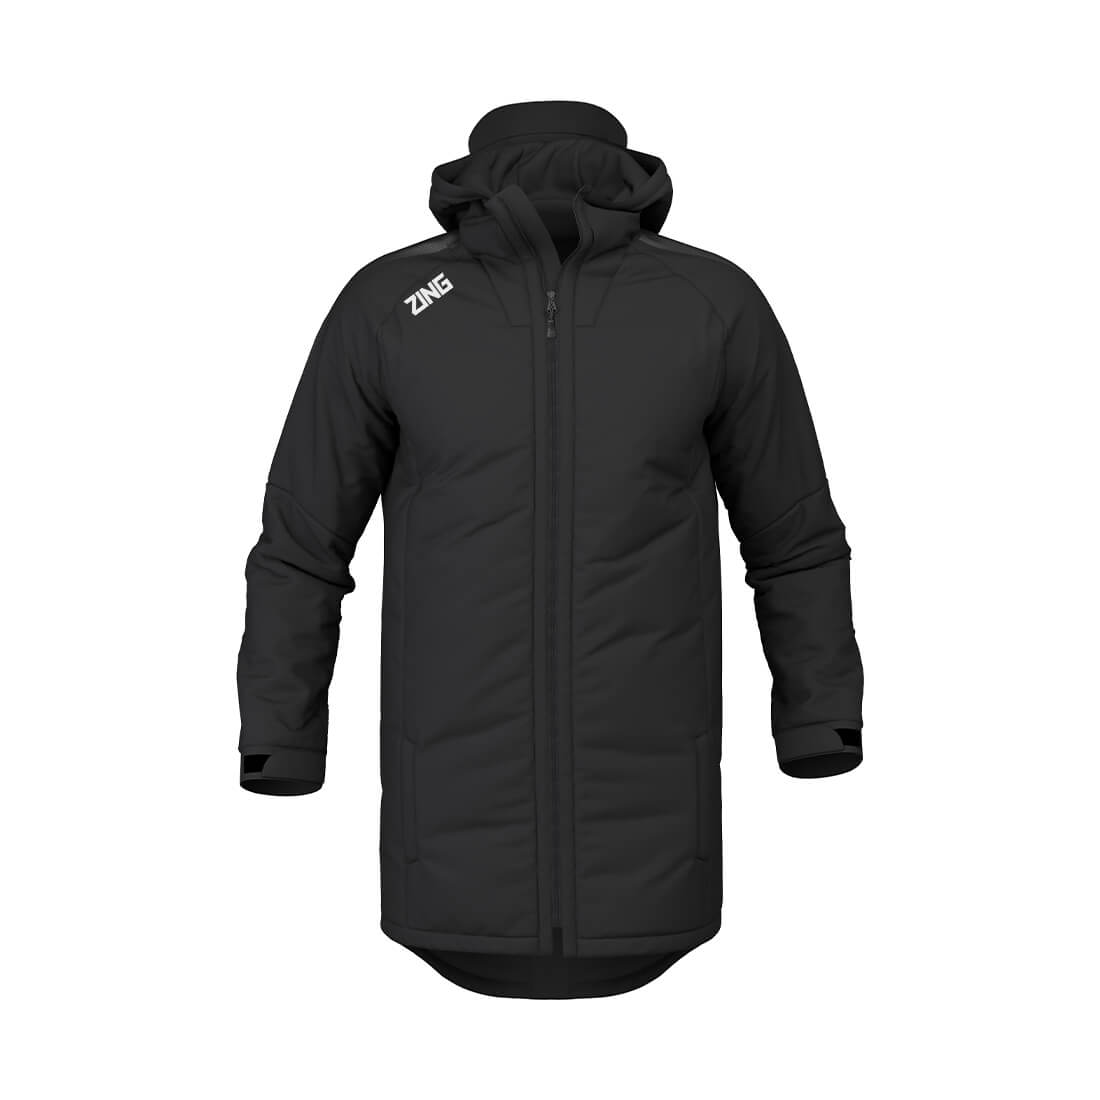 ZING Sportswear Match Coat | Training Kit and Teamwear - Black Front